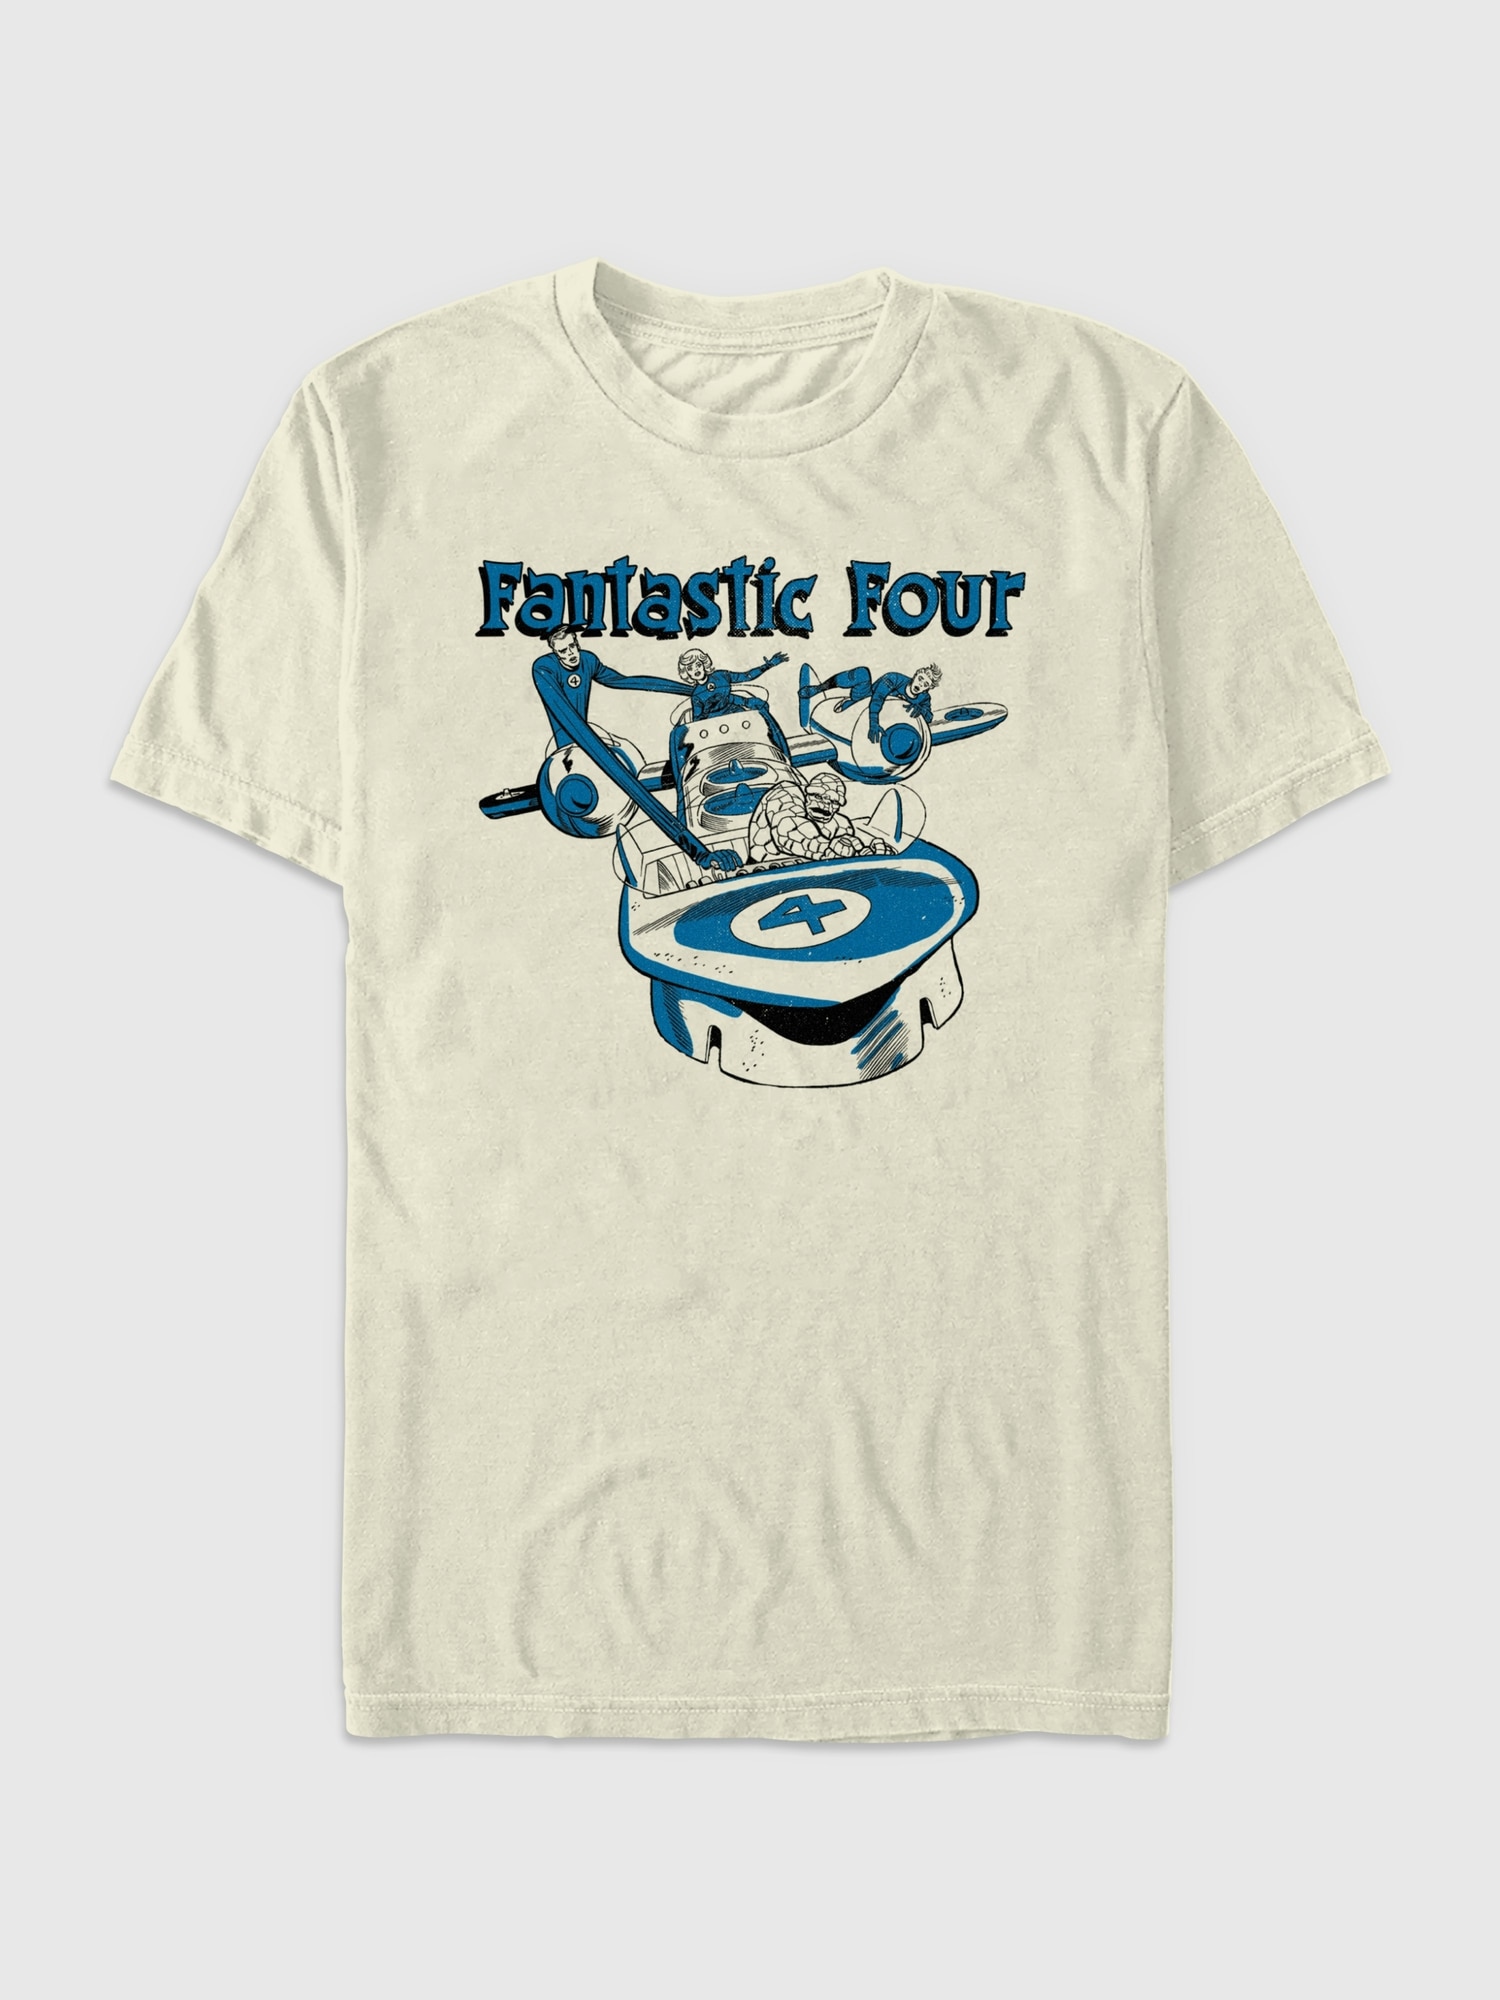 Fantastic Four Graphic Tee